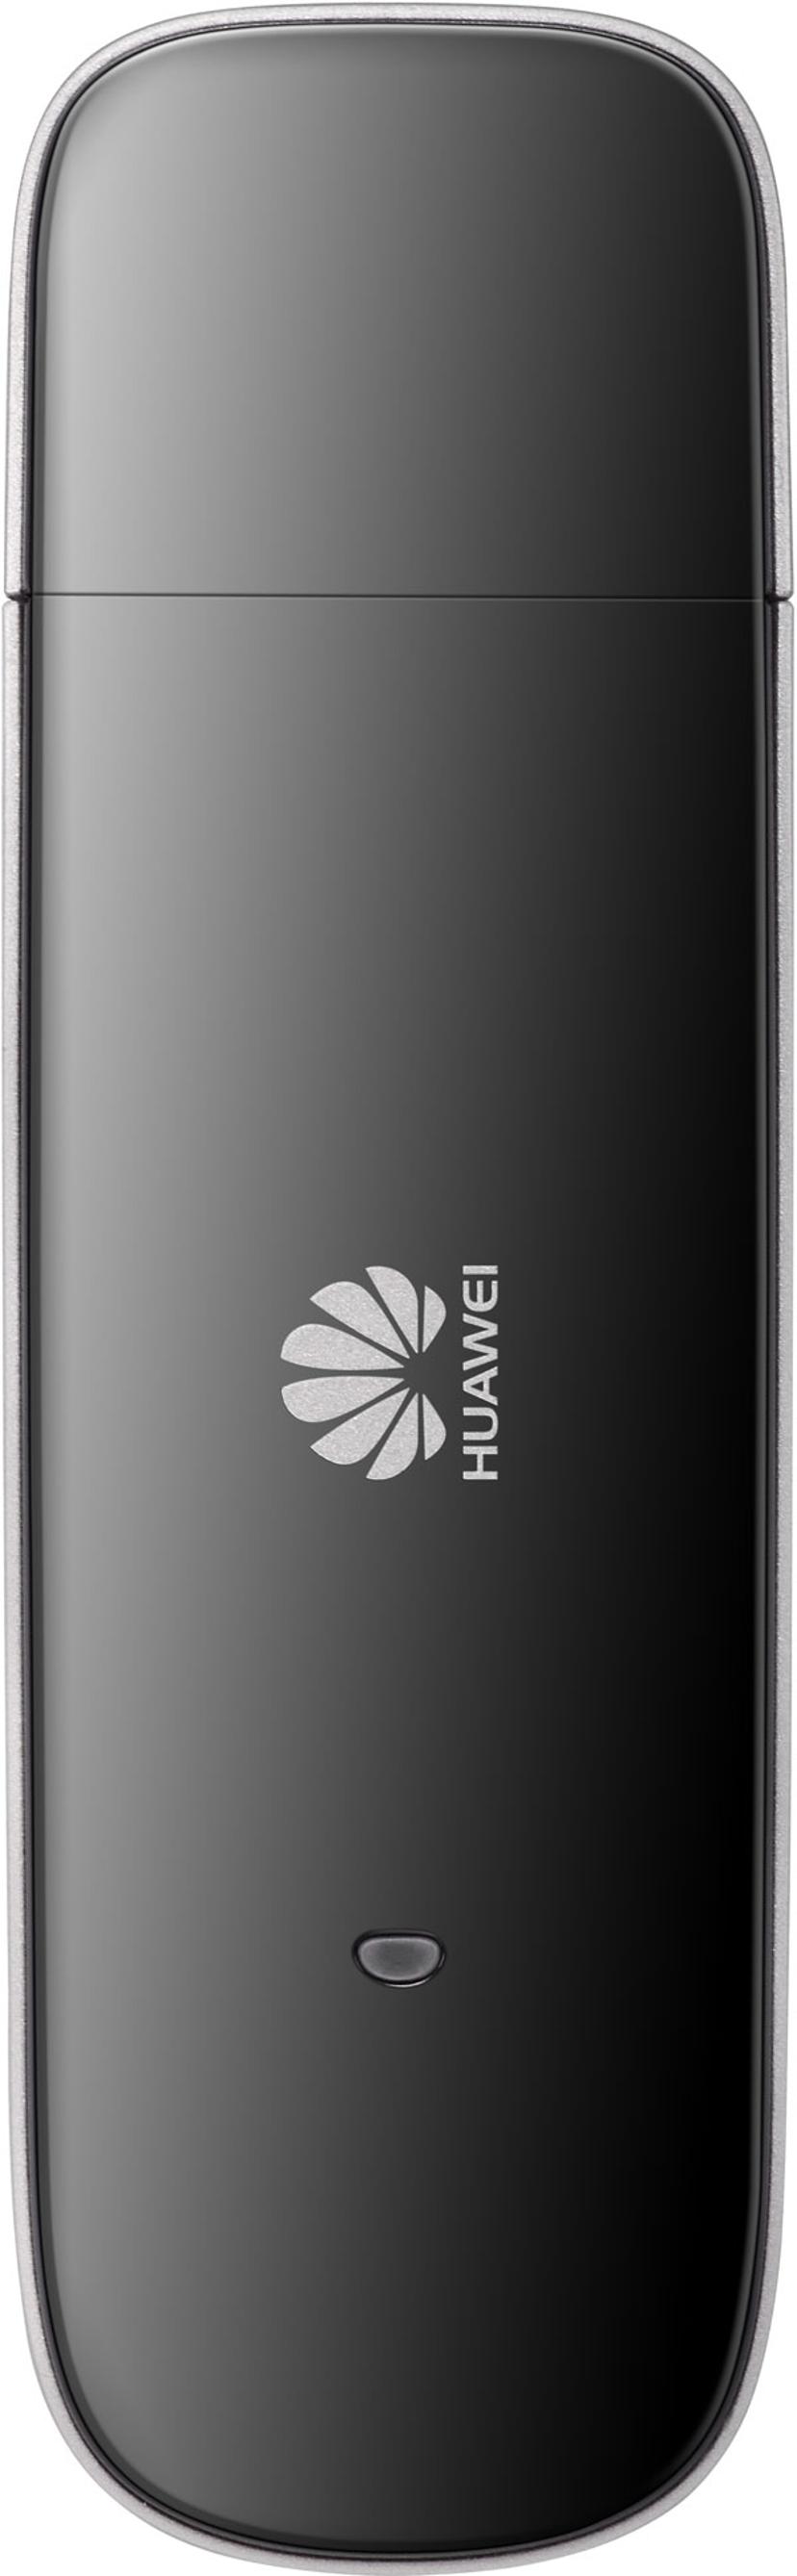 Huawei E353 (51077612) Dustin.dk